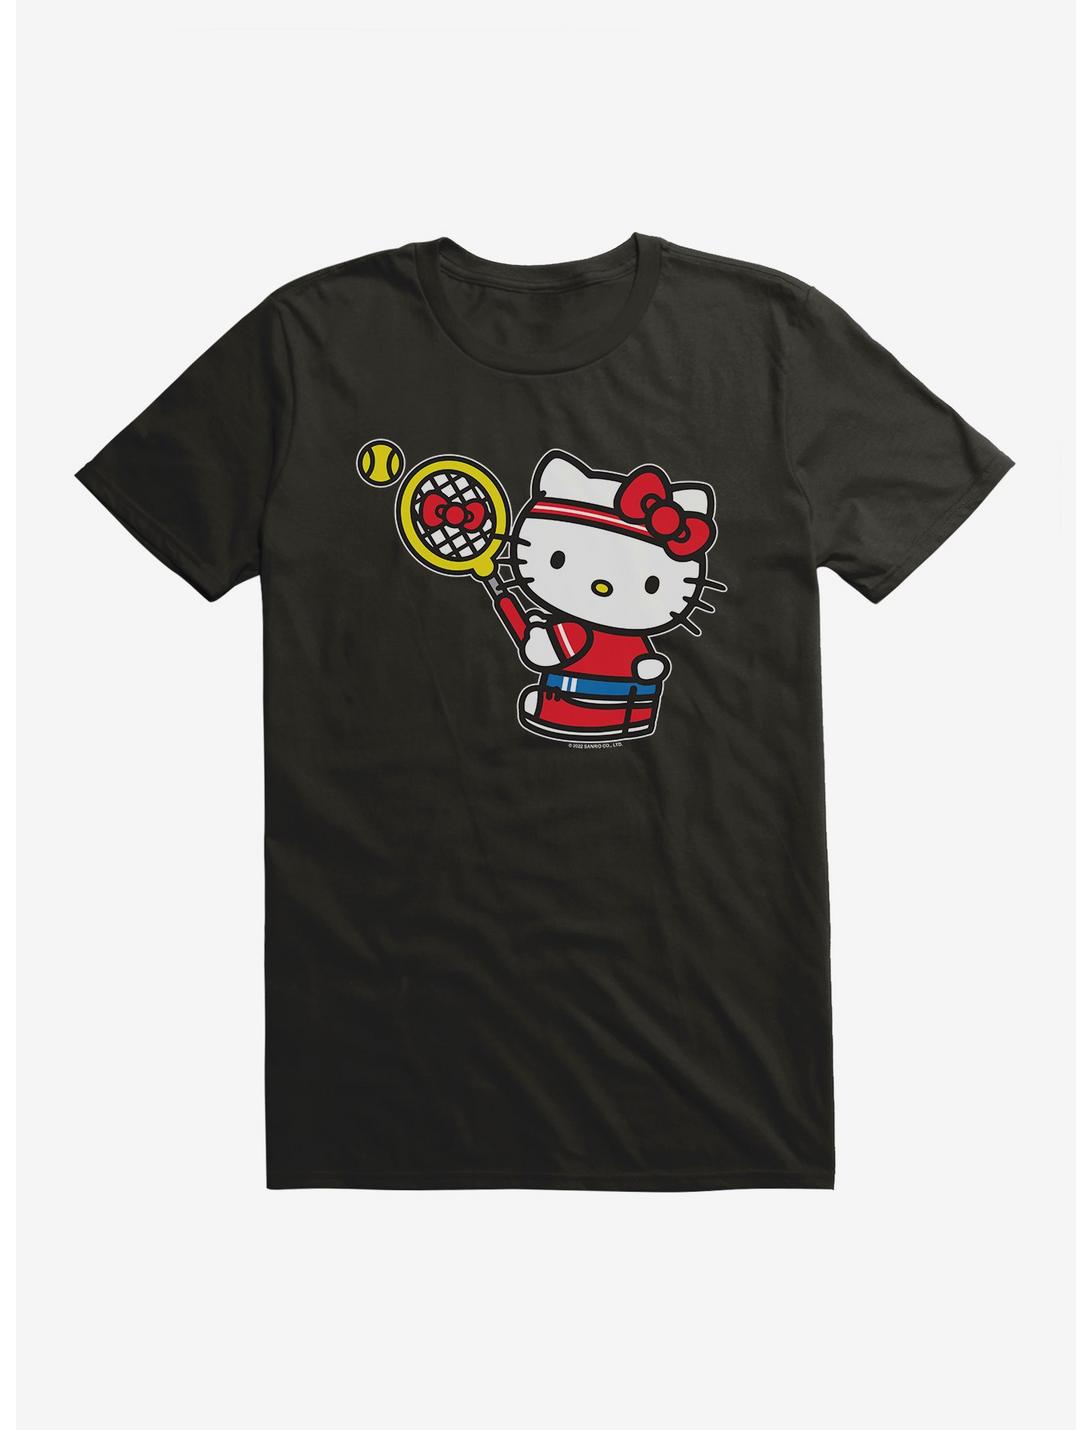 Hello Kitty Tennis Serve T-Shirt, , hi-res